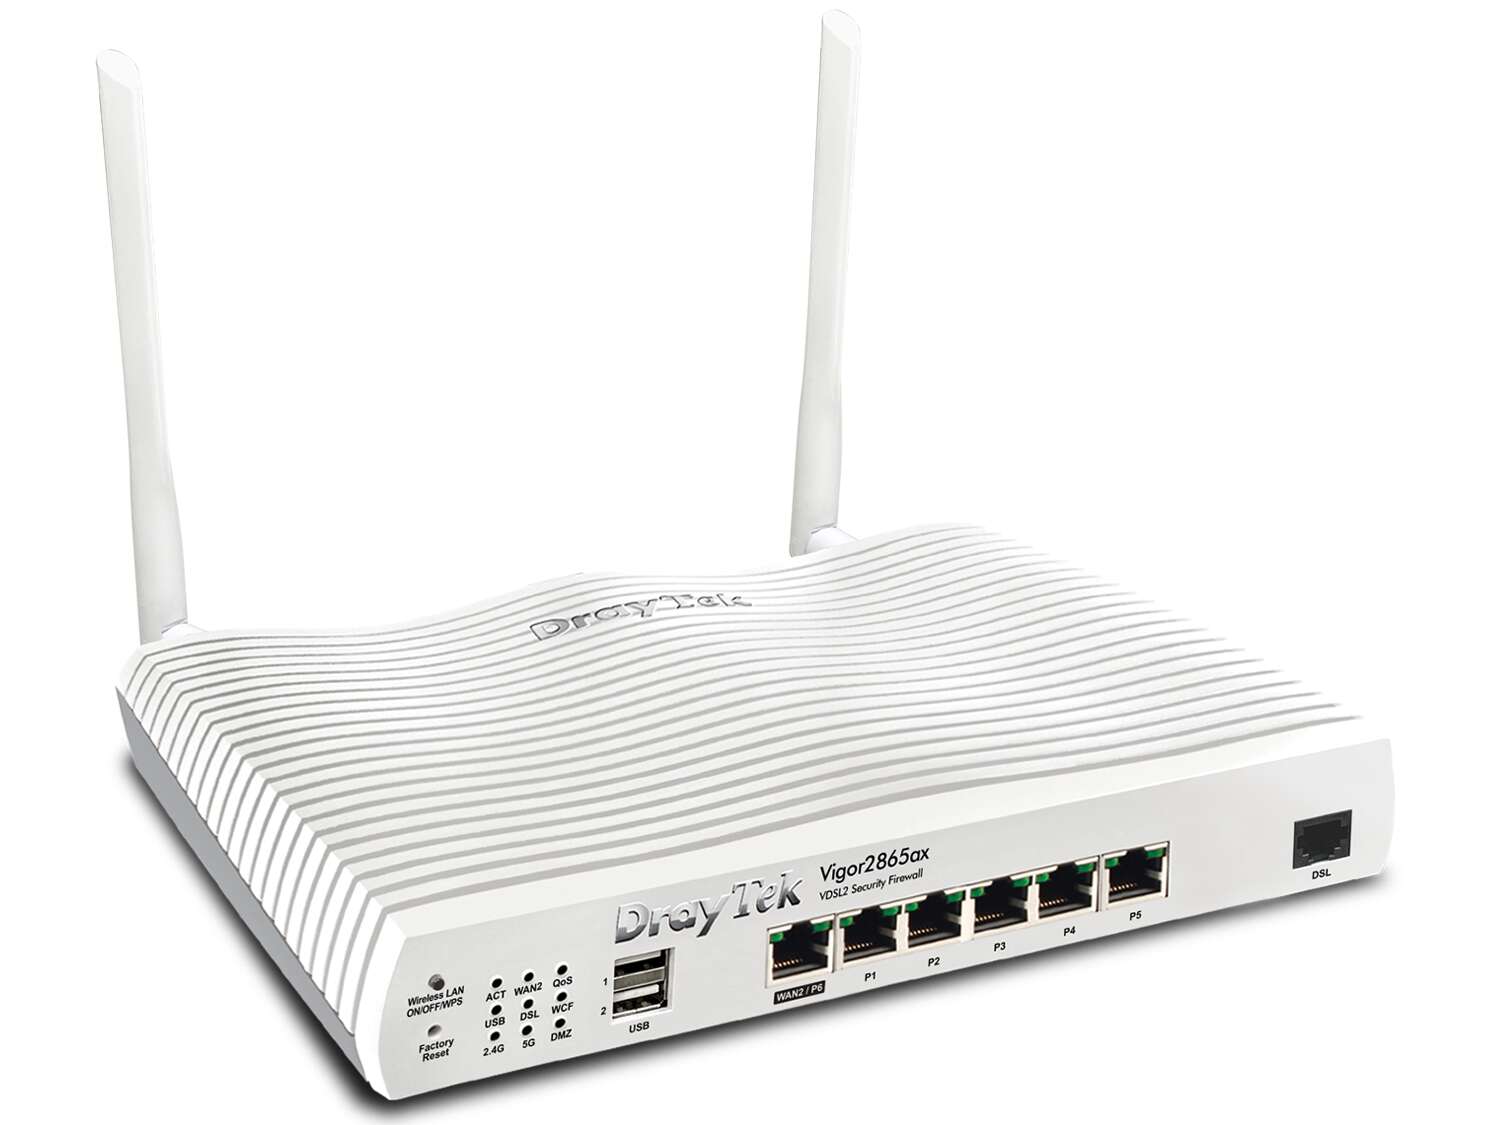 Draytek vigor 2865ax wireless ax3000 dual band gigabit router